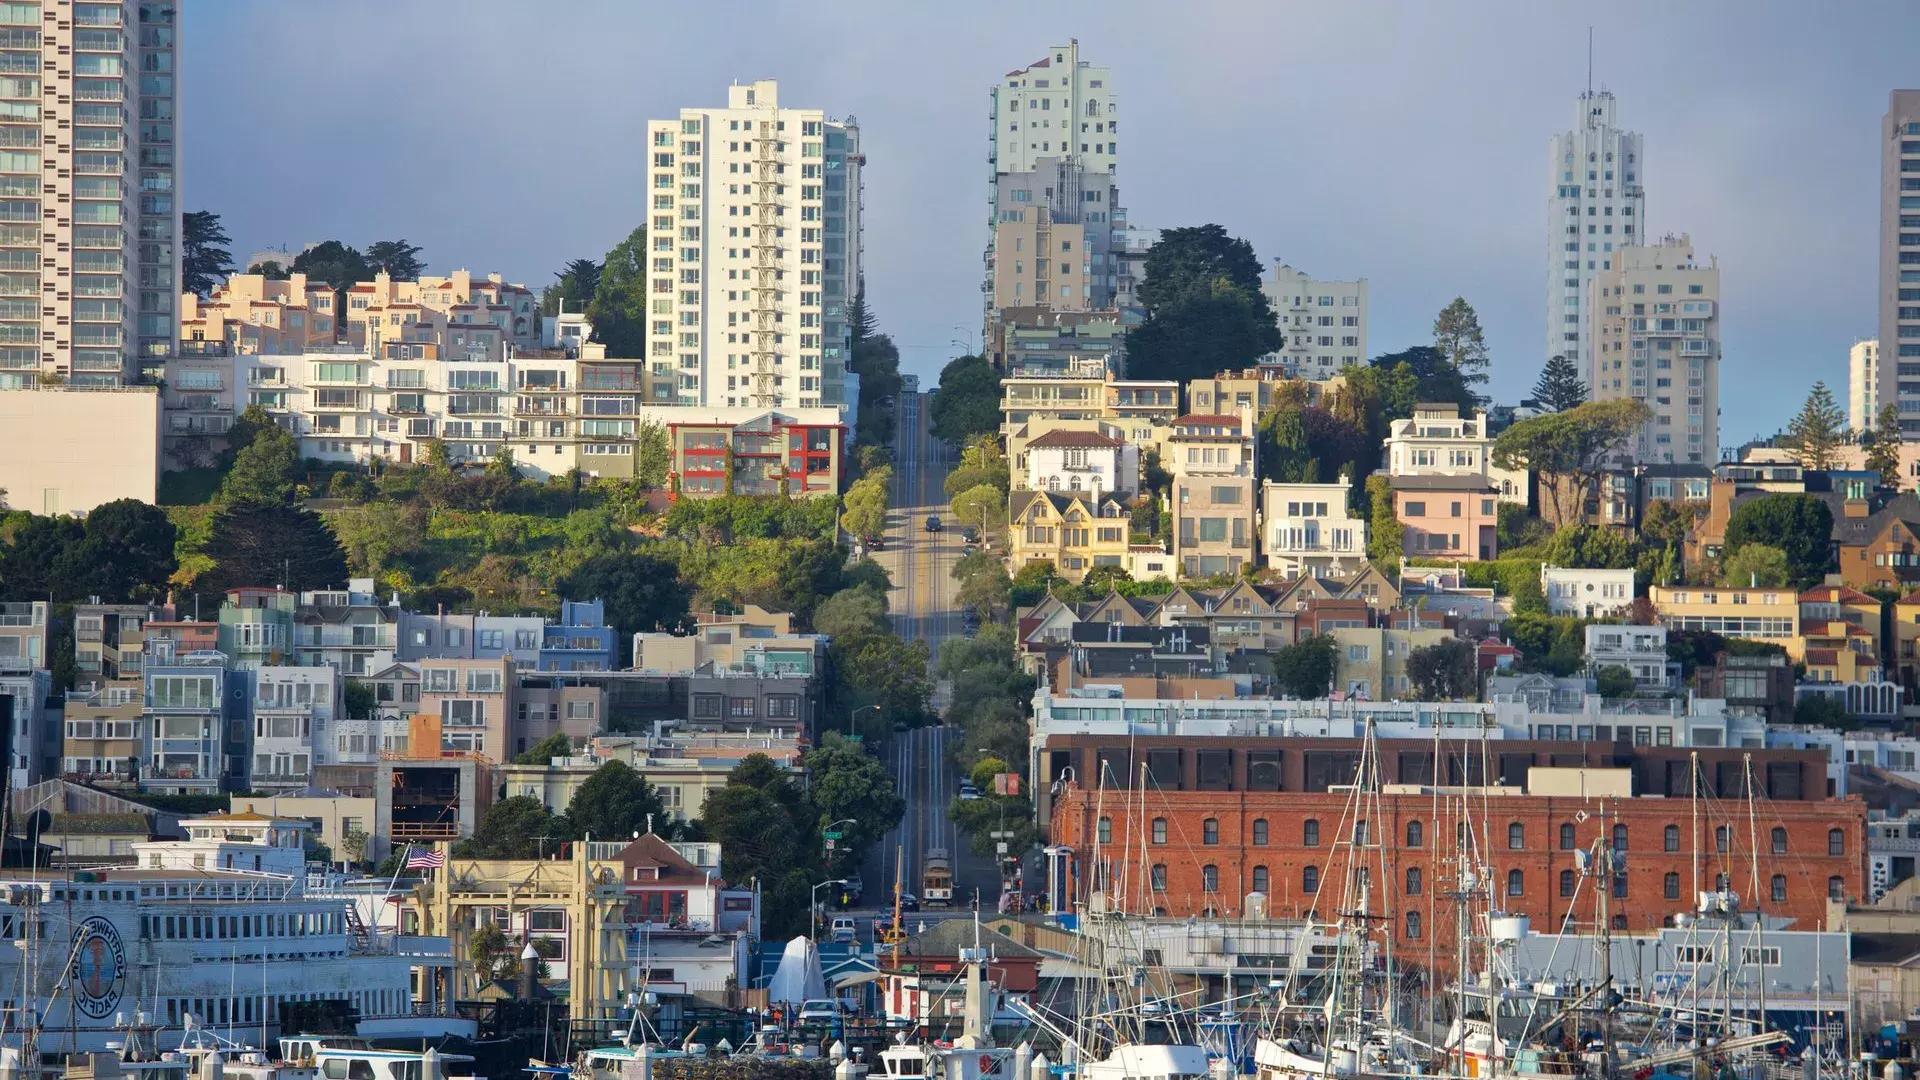 San Francisco's marina and Hyde Street